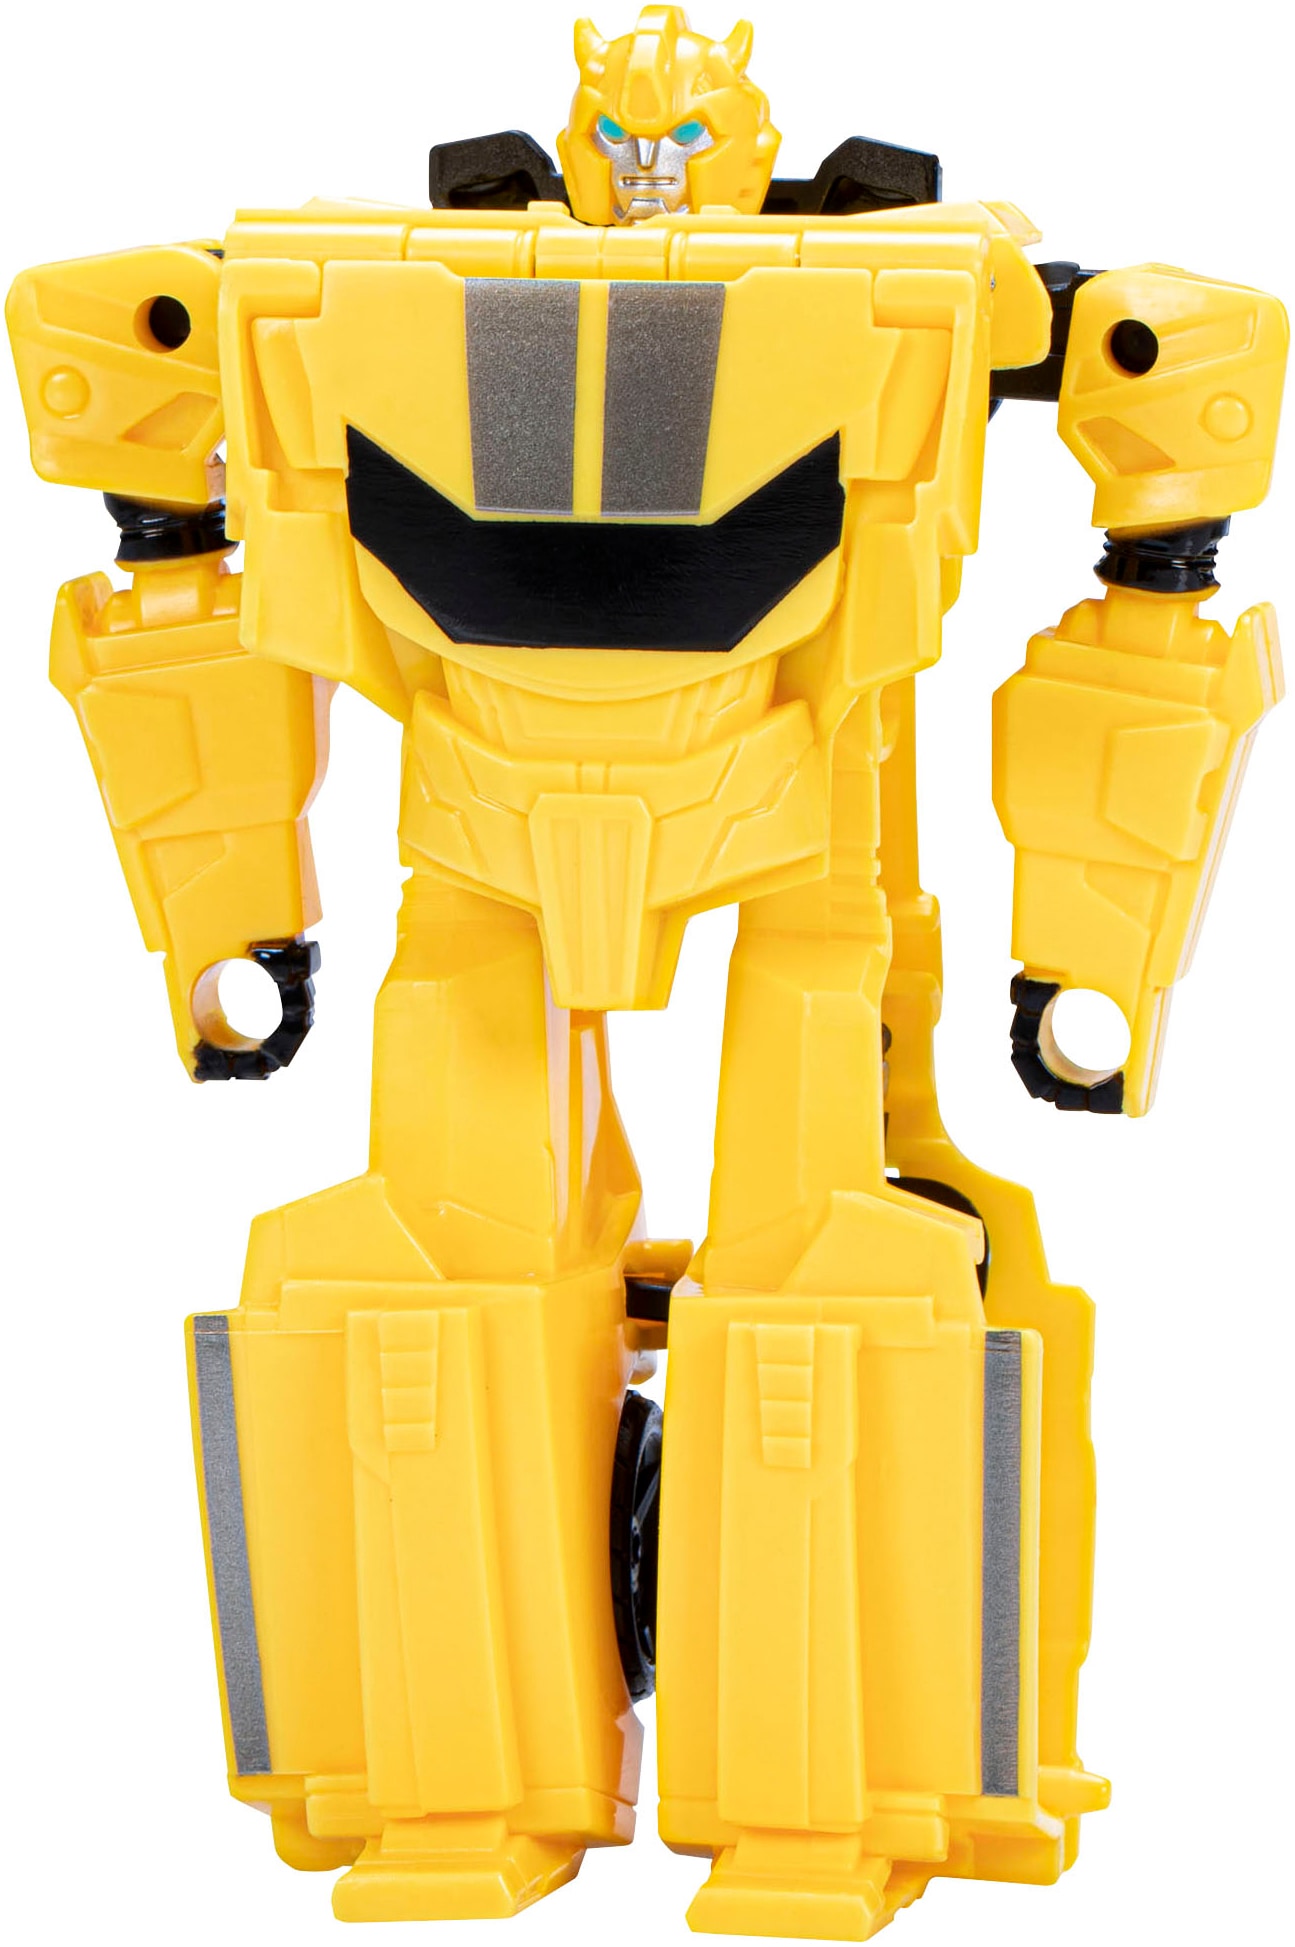 Hasbro Actionfigur »Transformers EarthSpark, 1-Step Flip Changer Bumblebee«